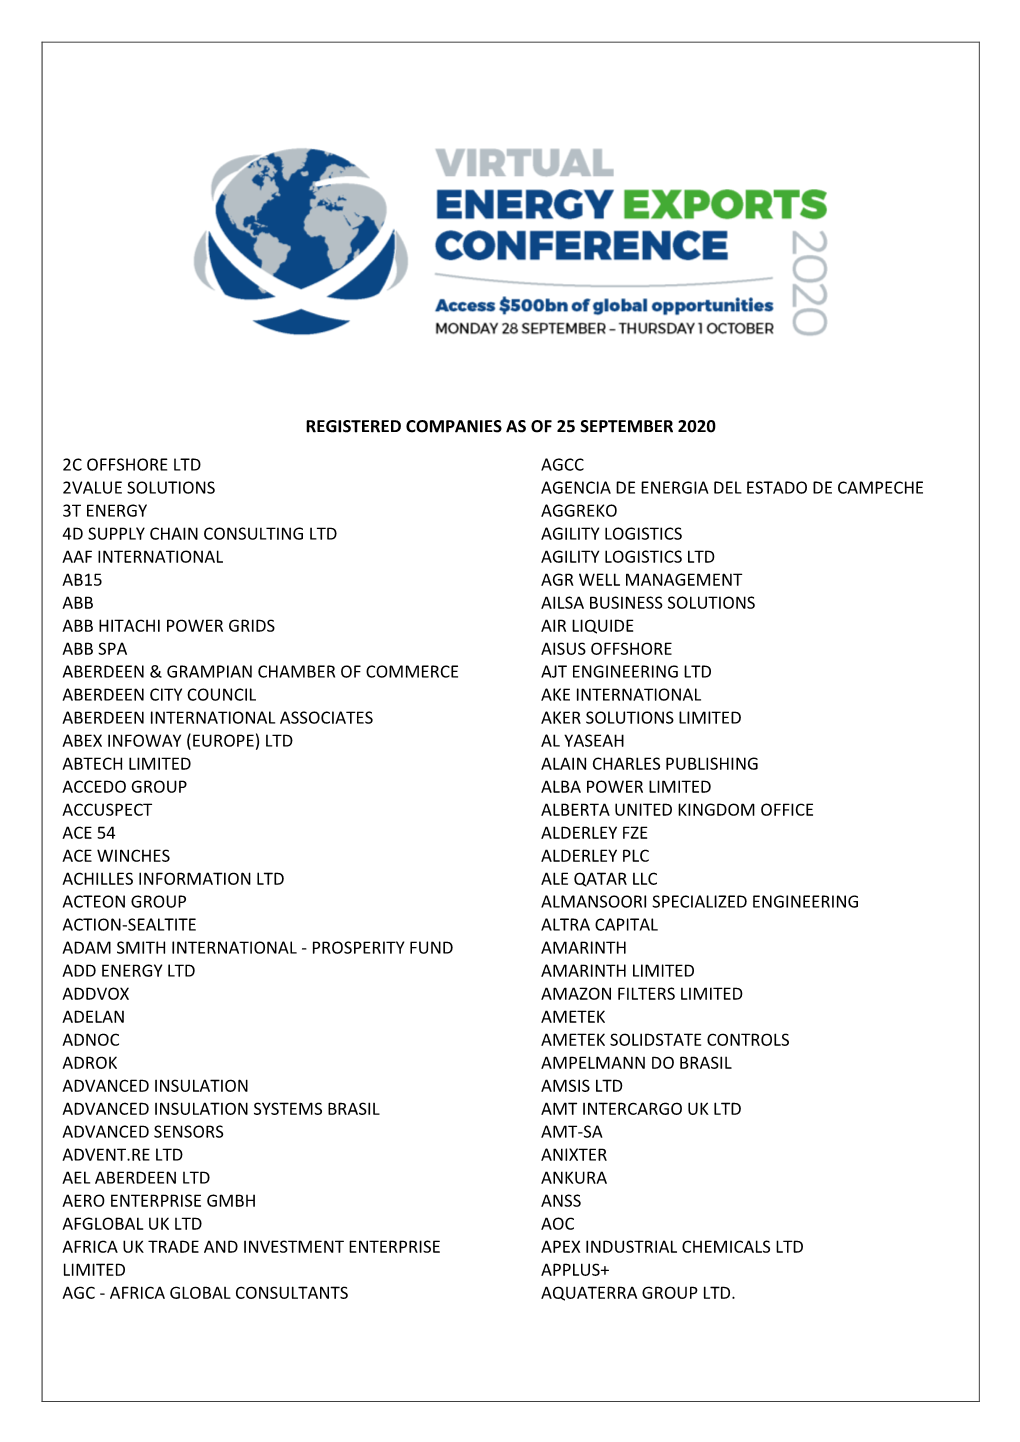 Registered Companies As of 25 September 2020